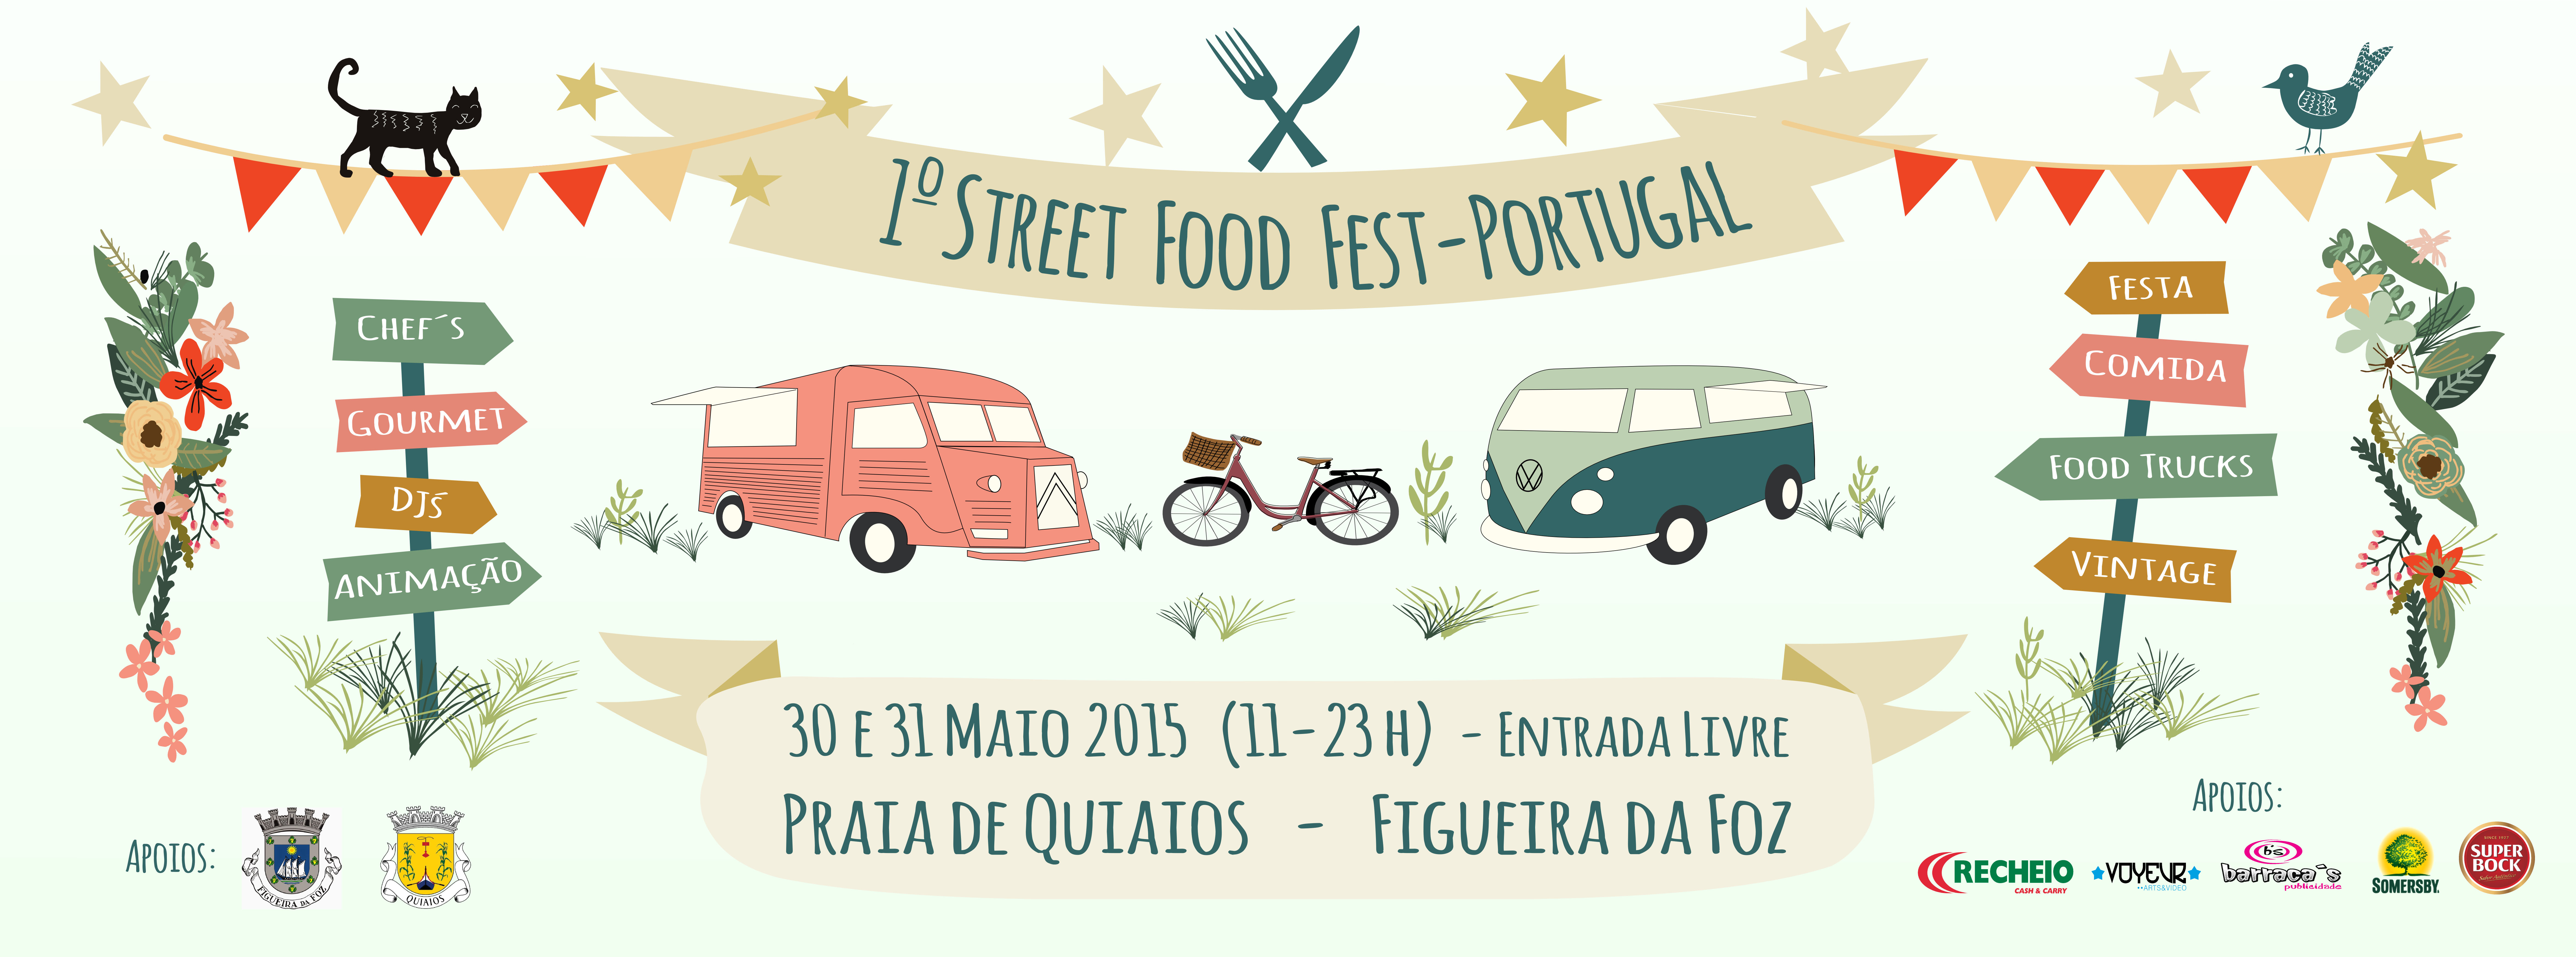 Praia de Quiaios recebe 1º STREET FOOD FEST de Portugal.